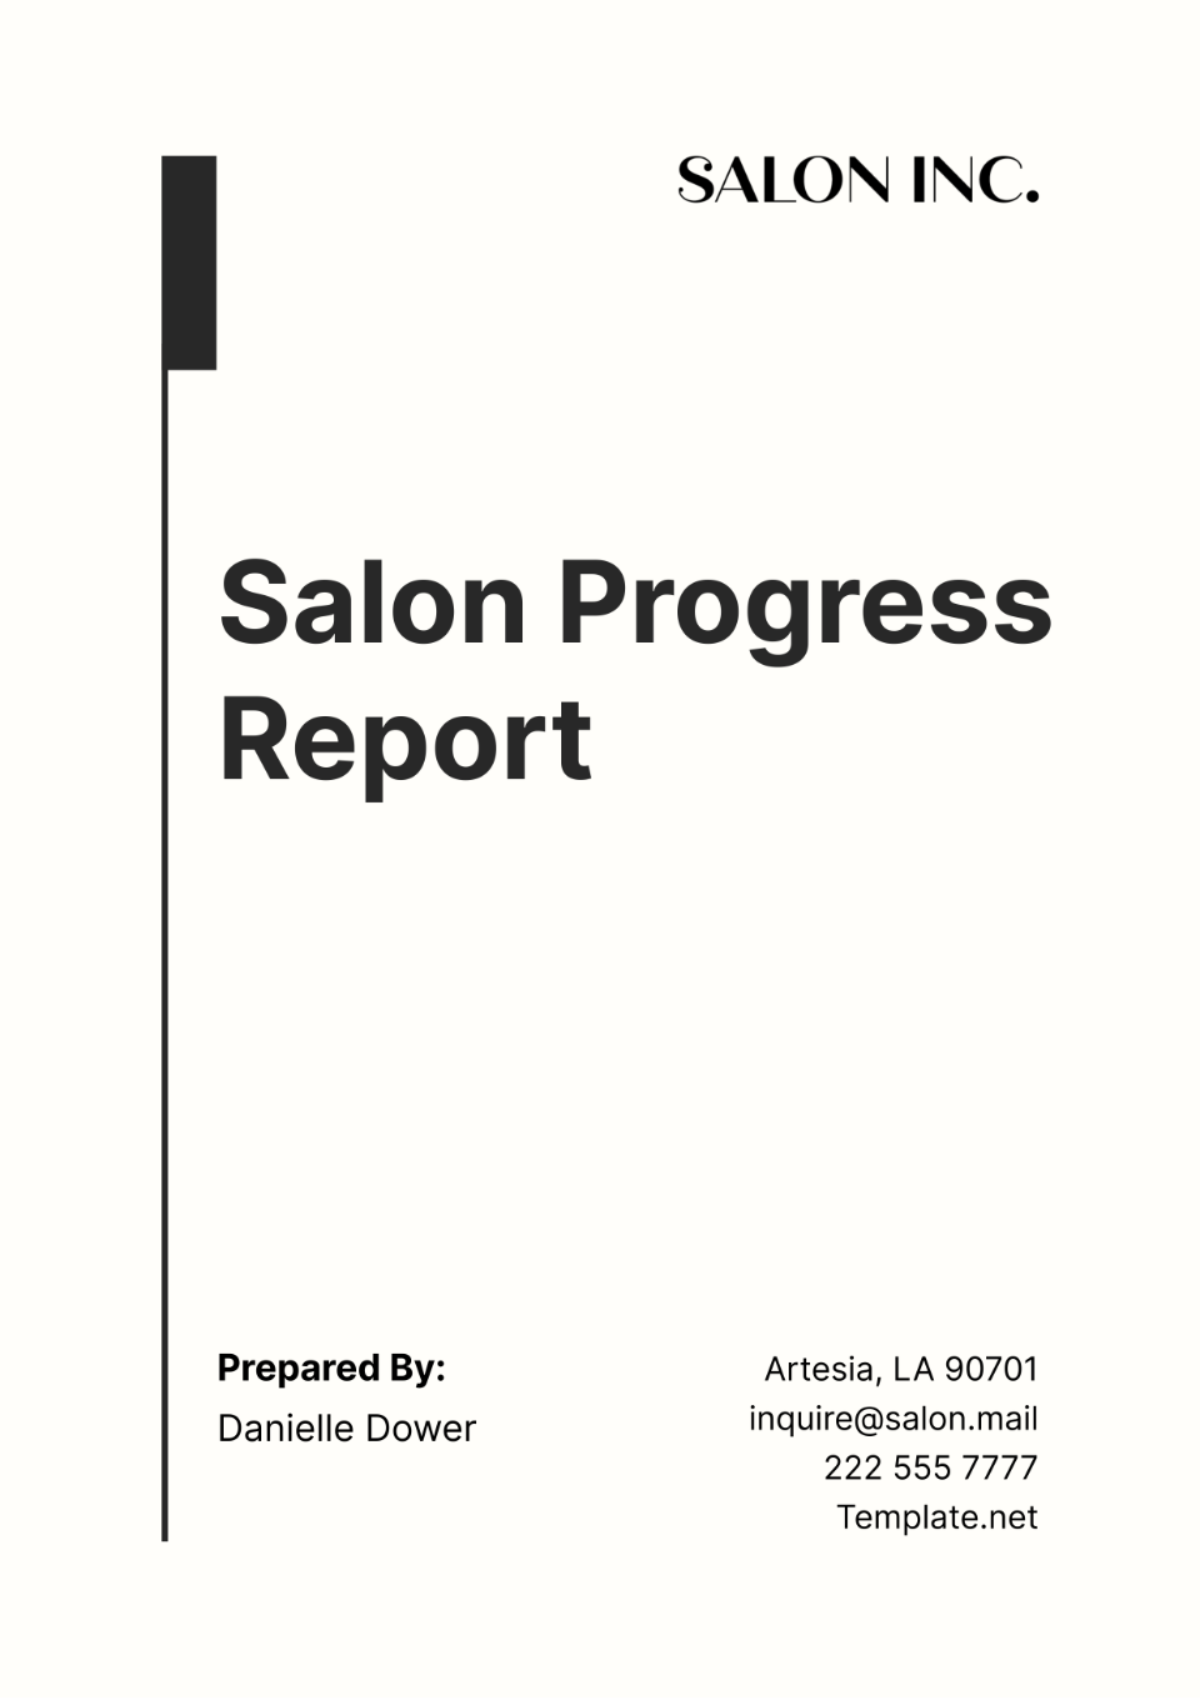 Salon Progress Report Template